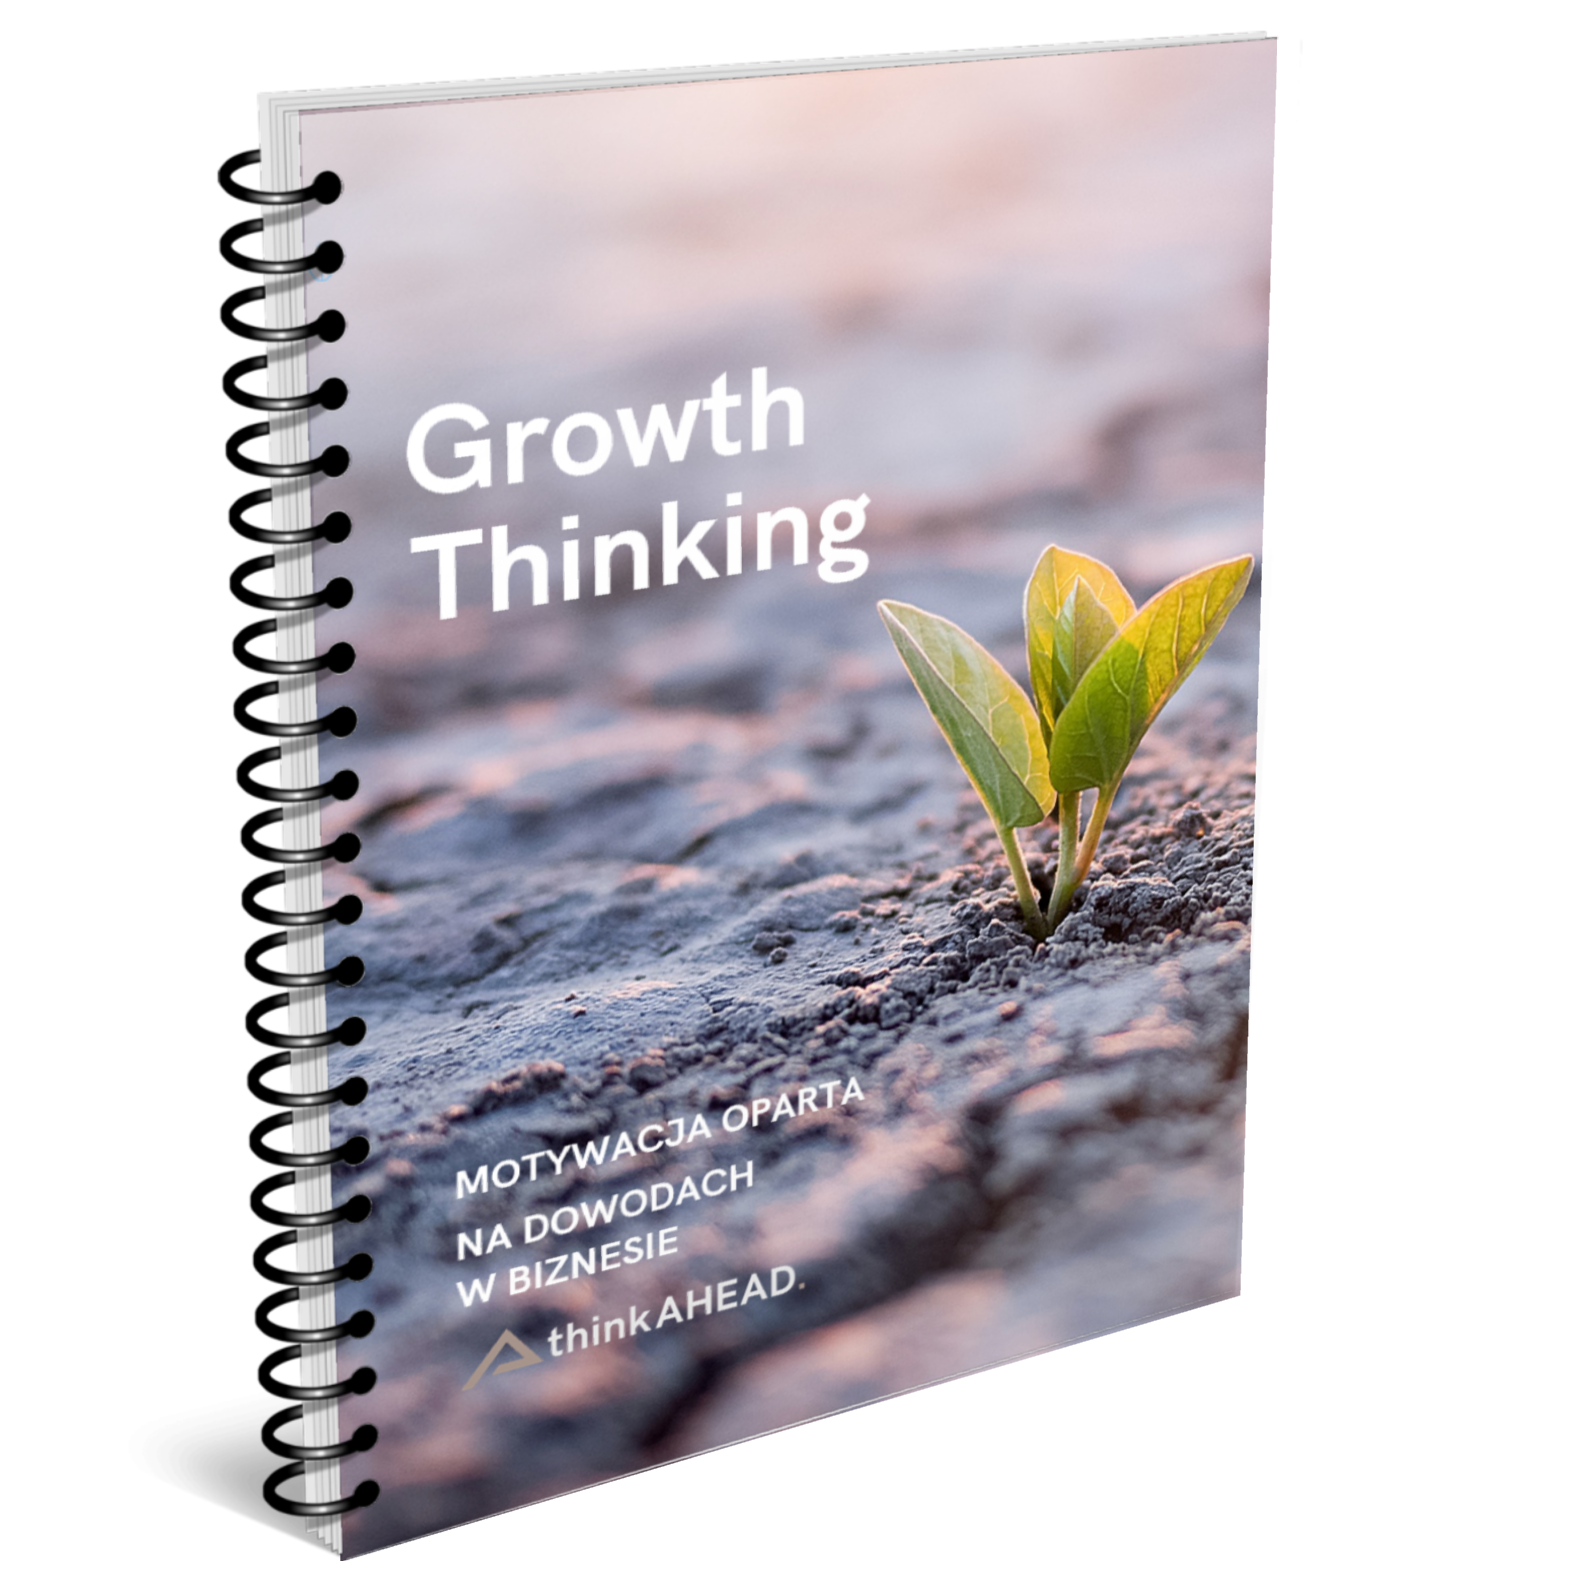 Growth thinking